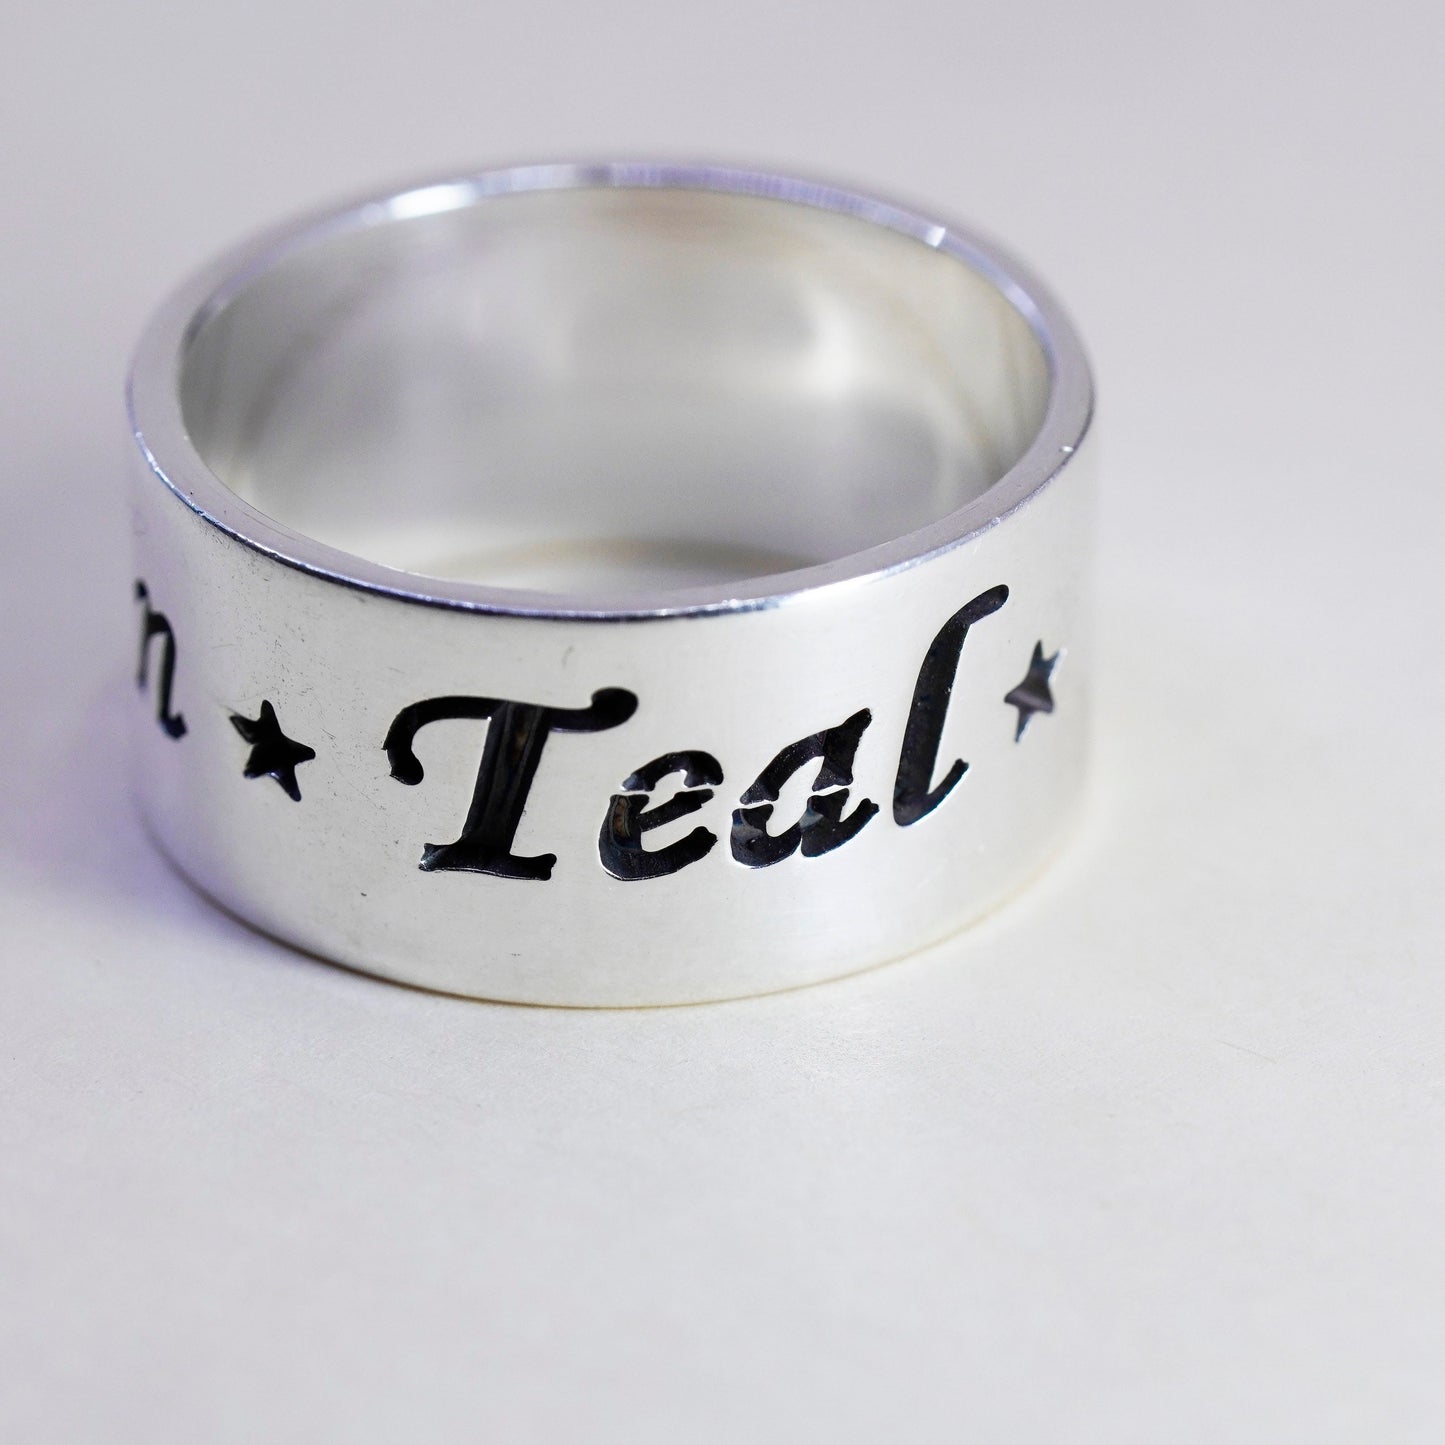 Size 13.25, Vintage sterling silver ring, 925 wide band engraved “Keegan Teal”